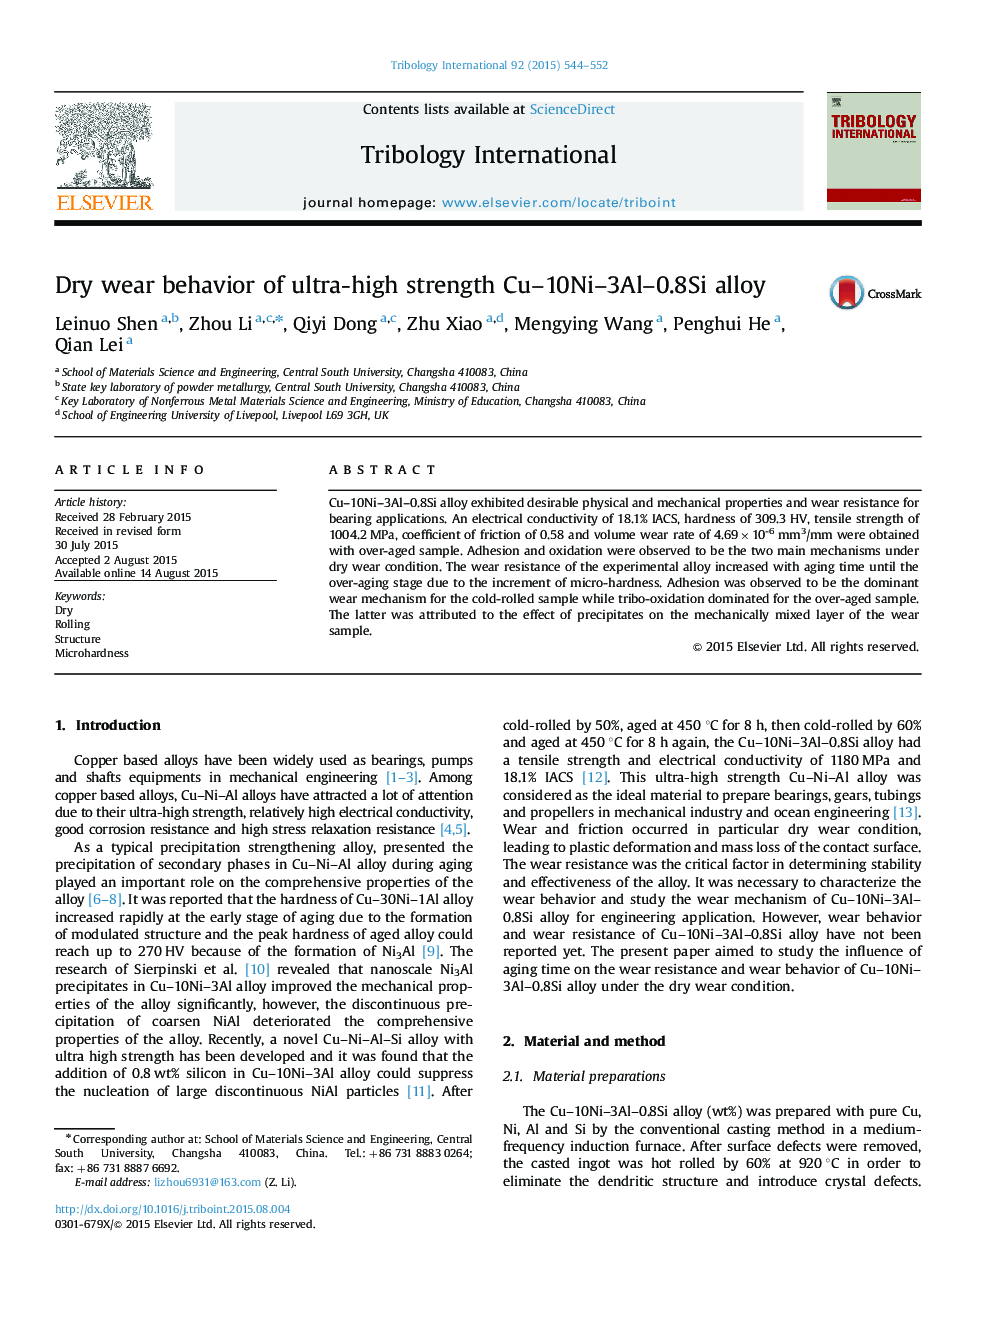 Dry wear behavior of ultra-high strength Cu-10Ni-3Al-0.8Si alloy